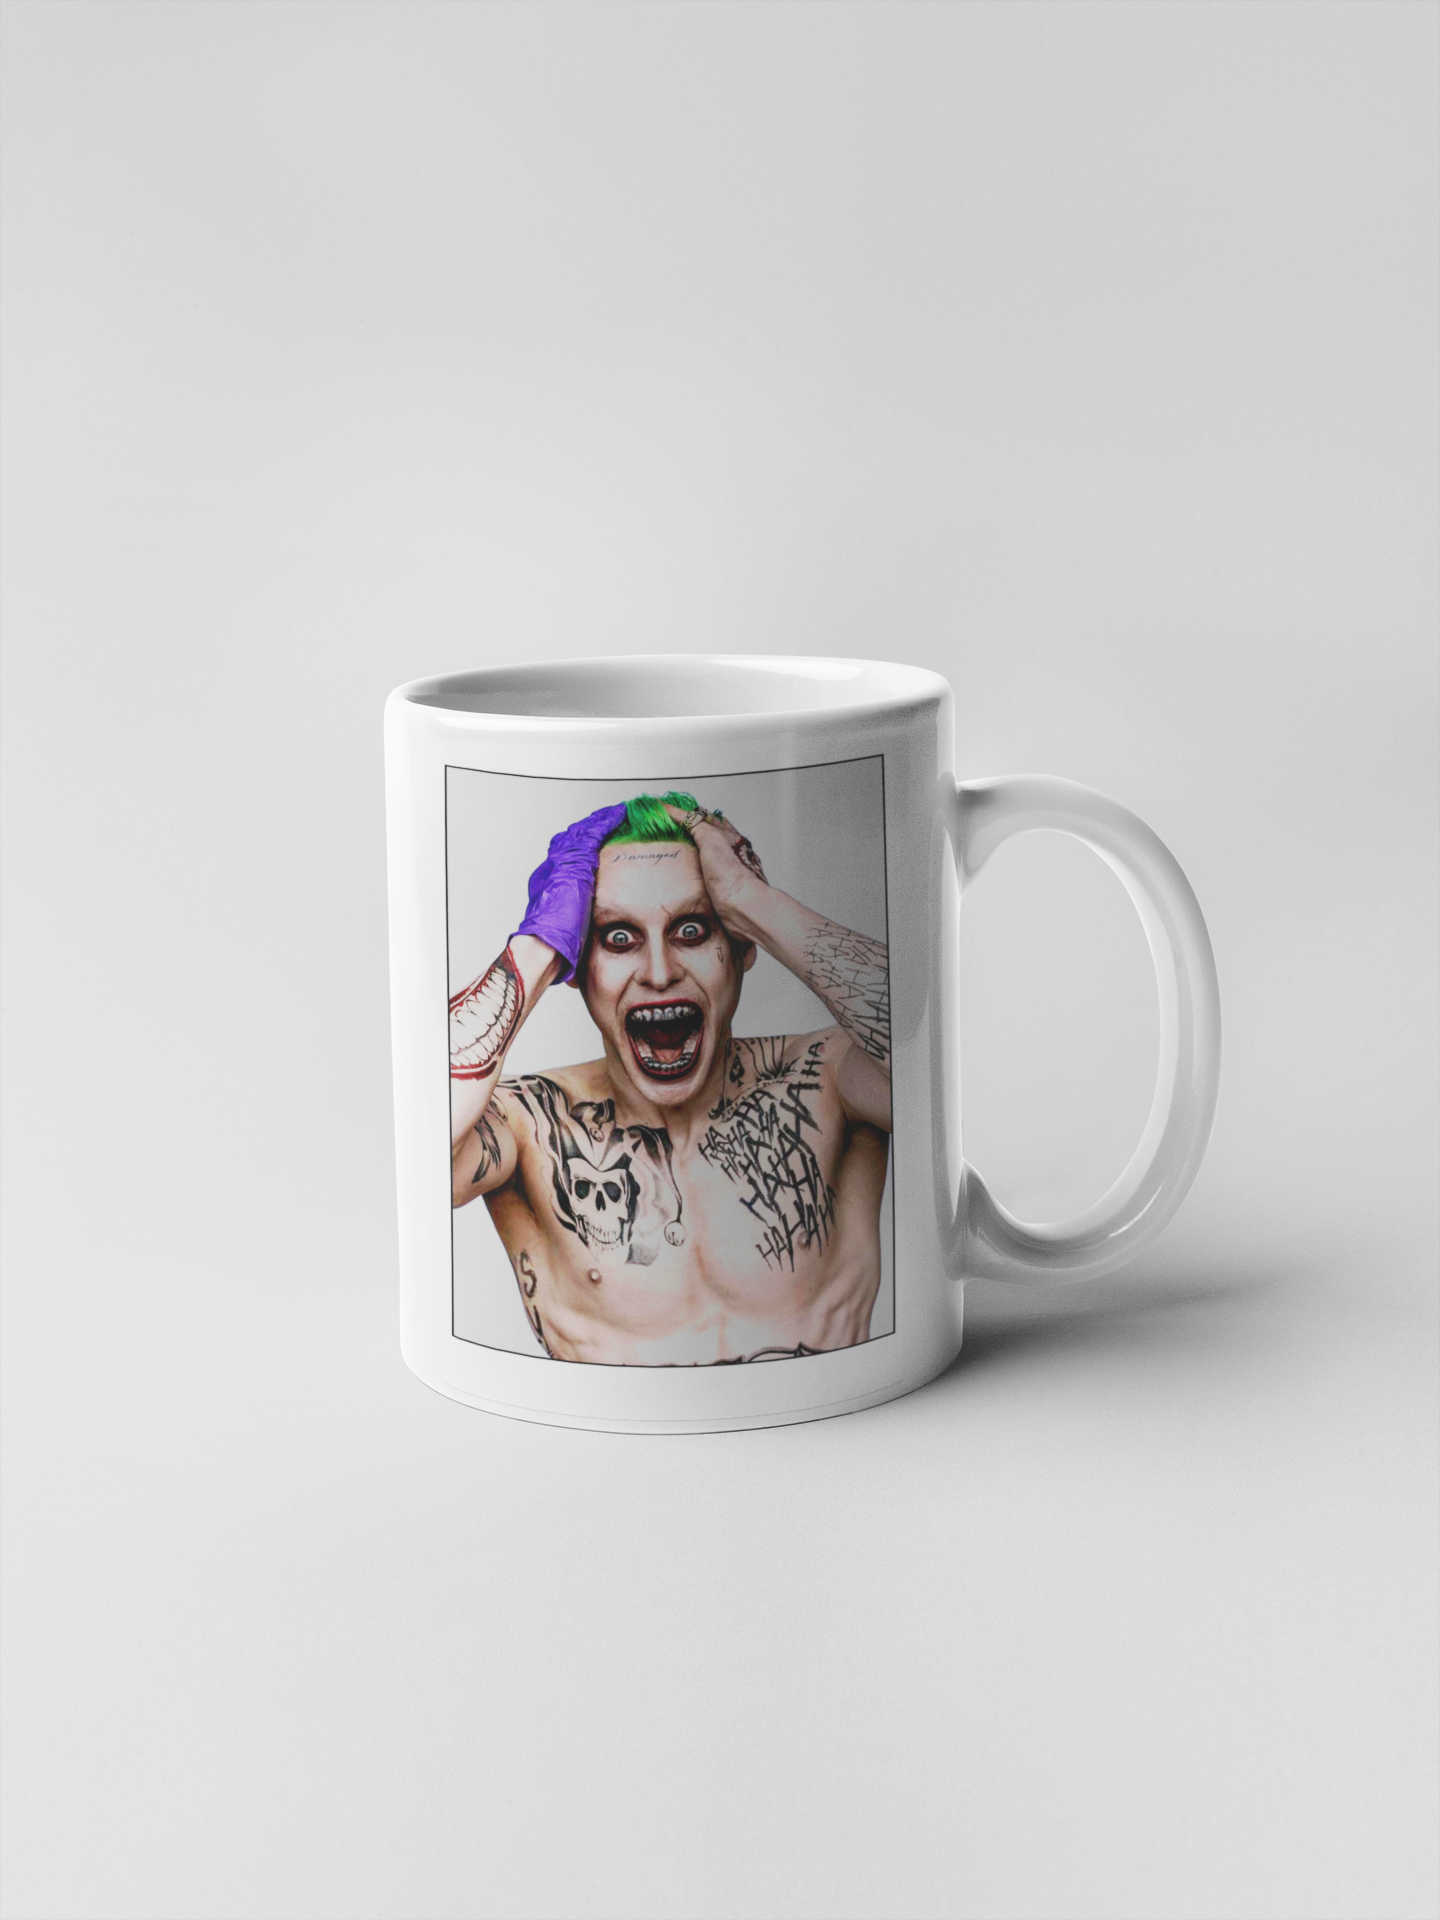 Jared Leto as Joker Ceramic Coffee Mugs